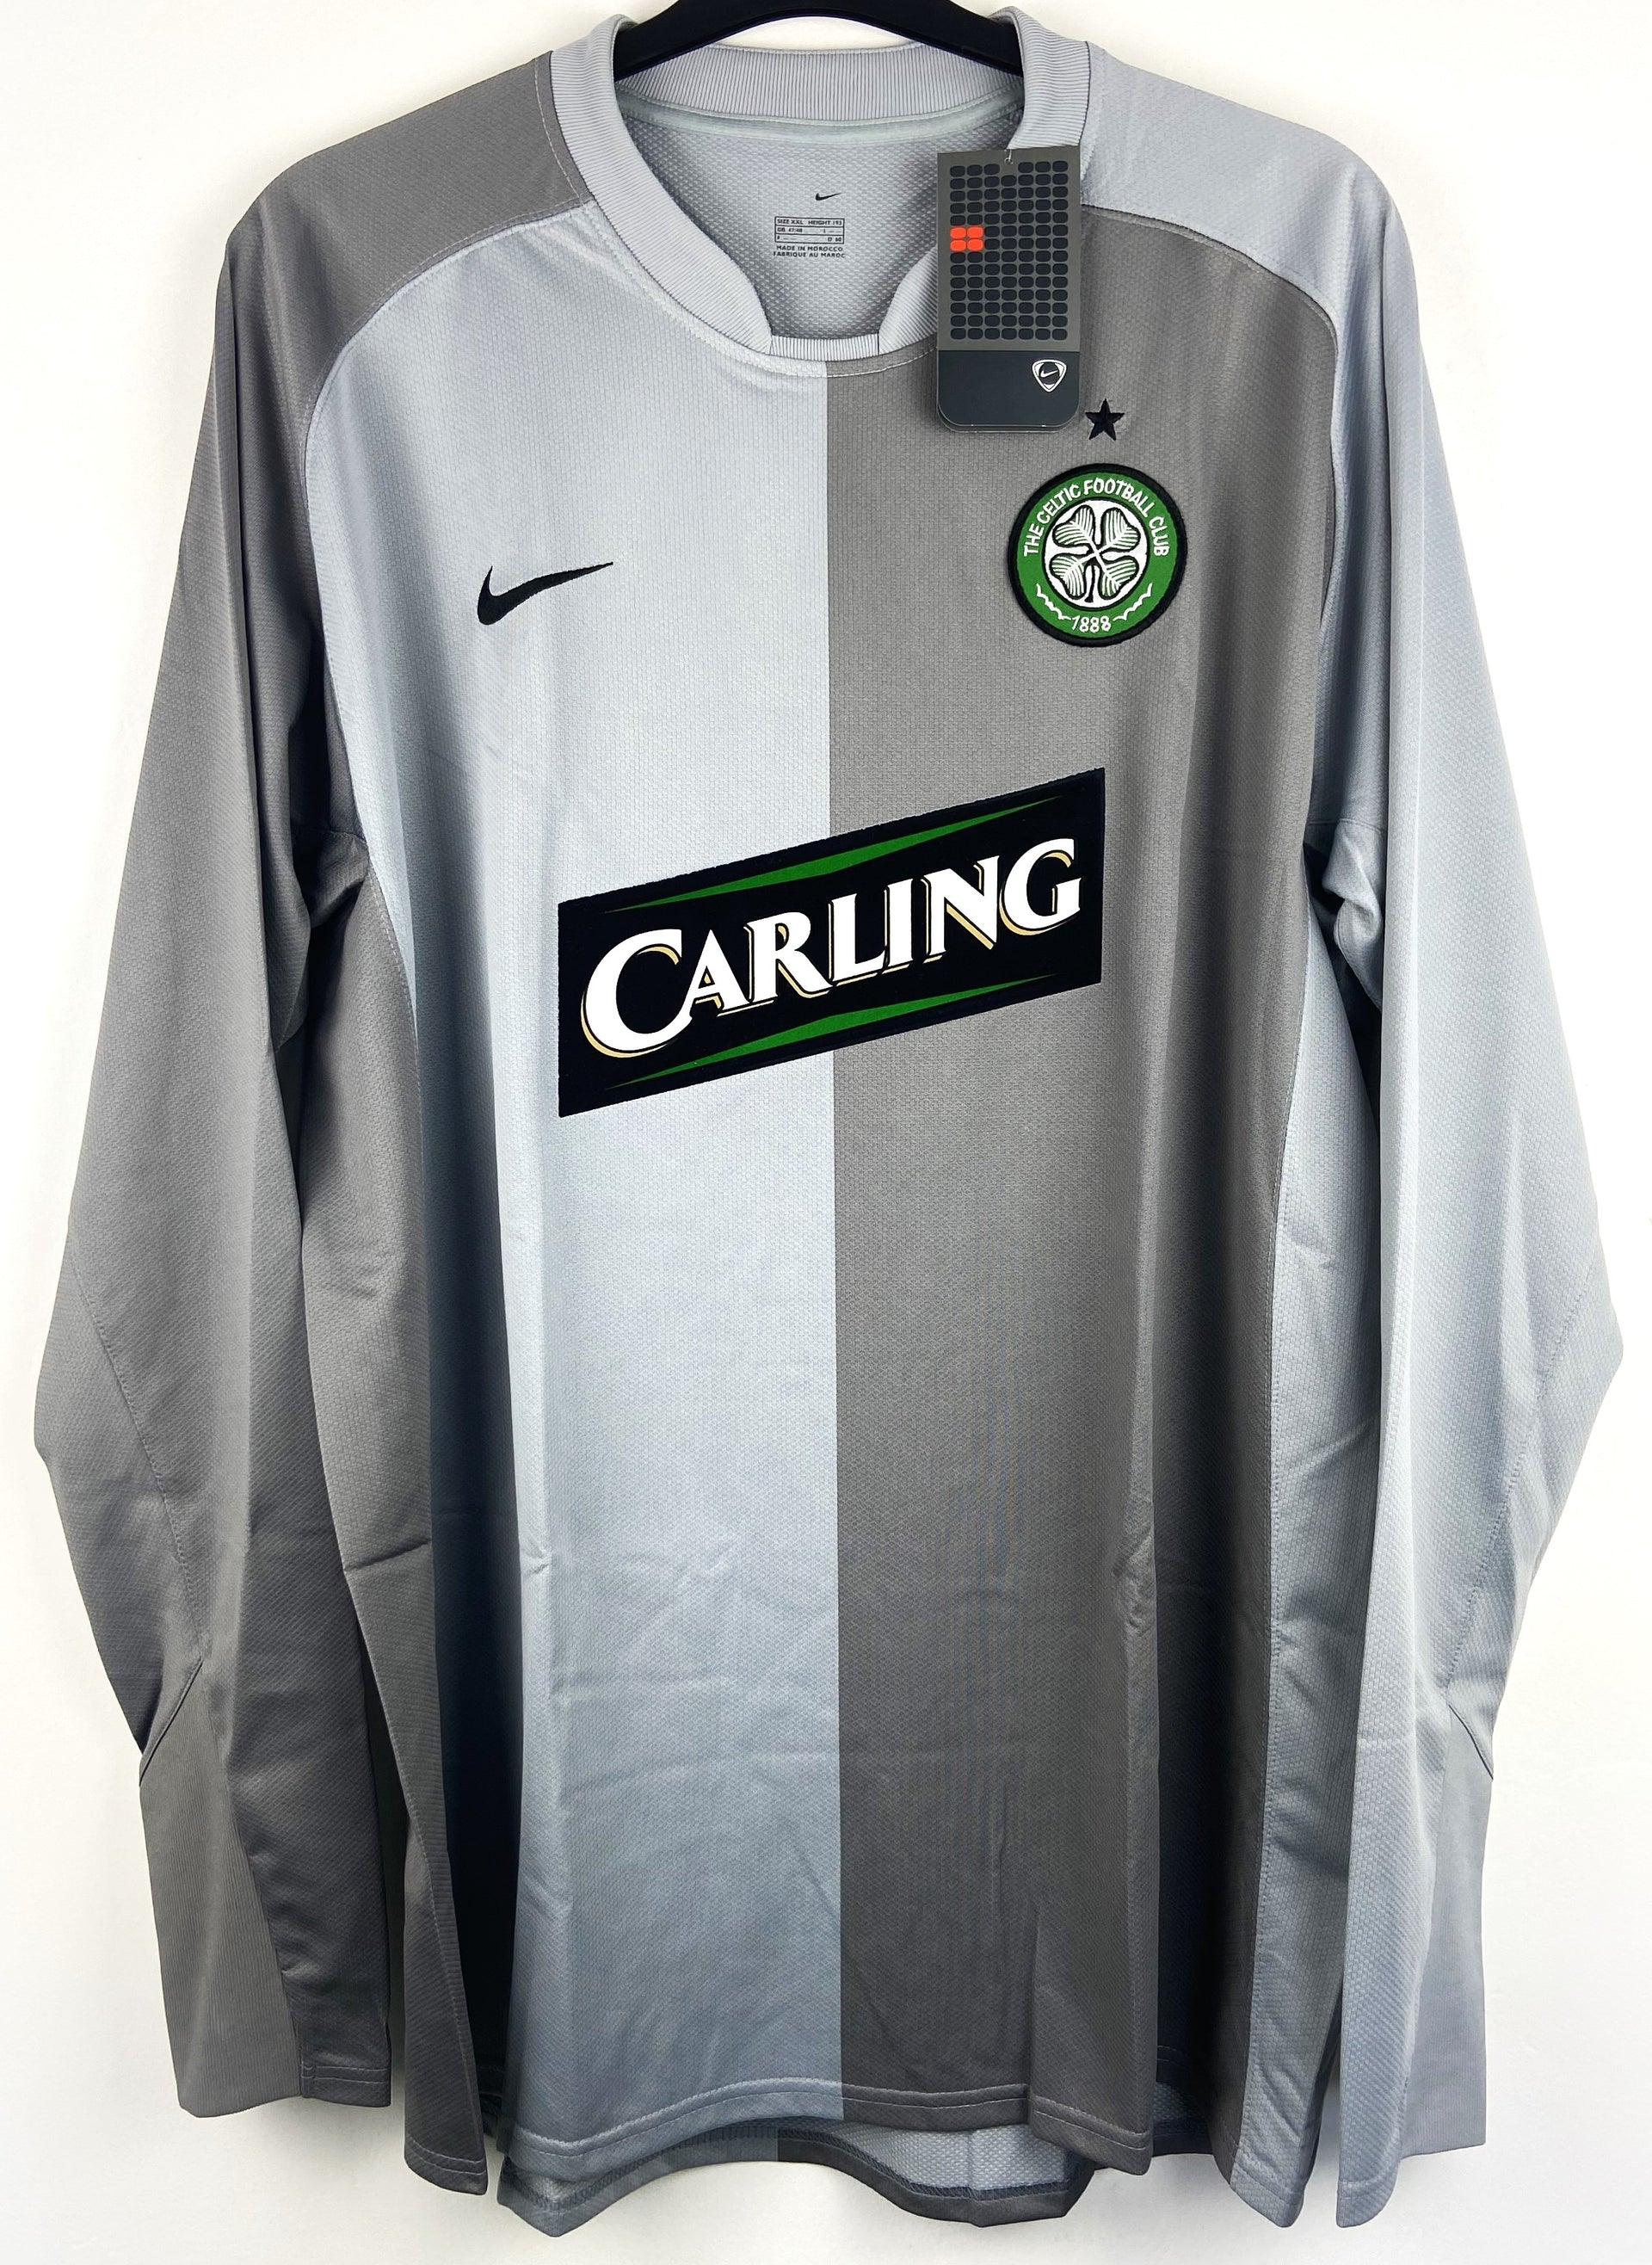 Celtic Goalkeeper football shirt 2008 - 2009. Sponsored by Carling